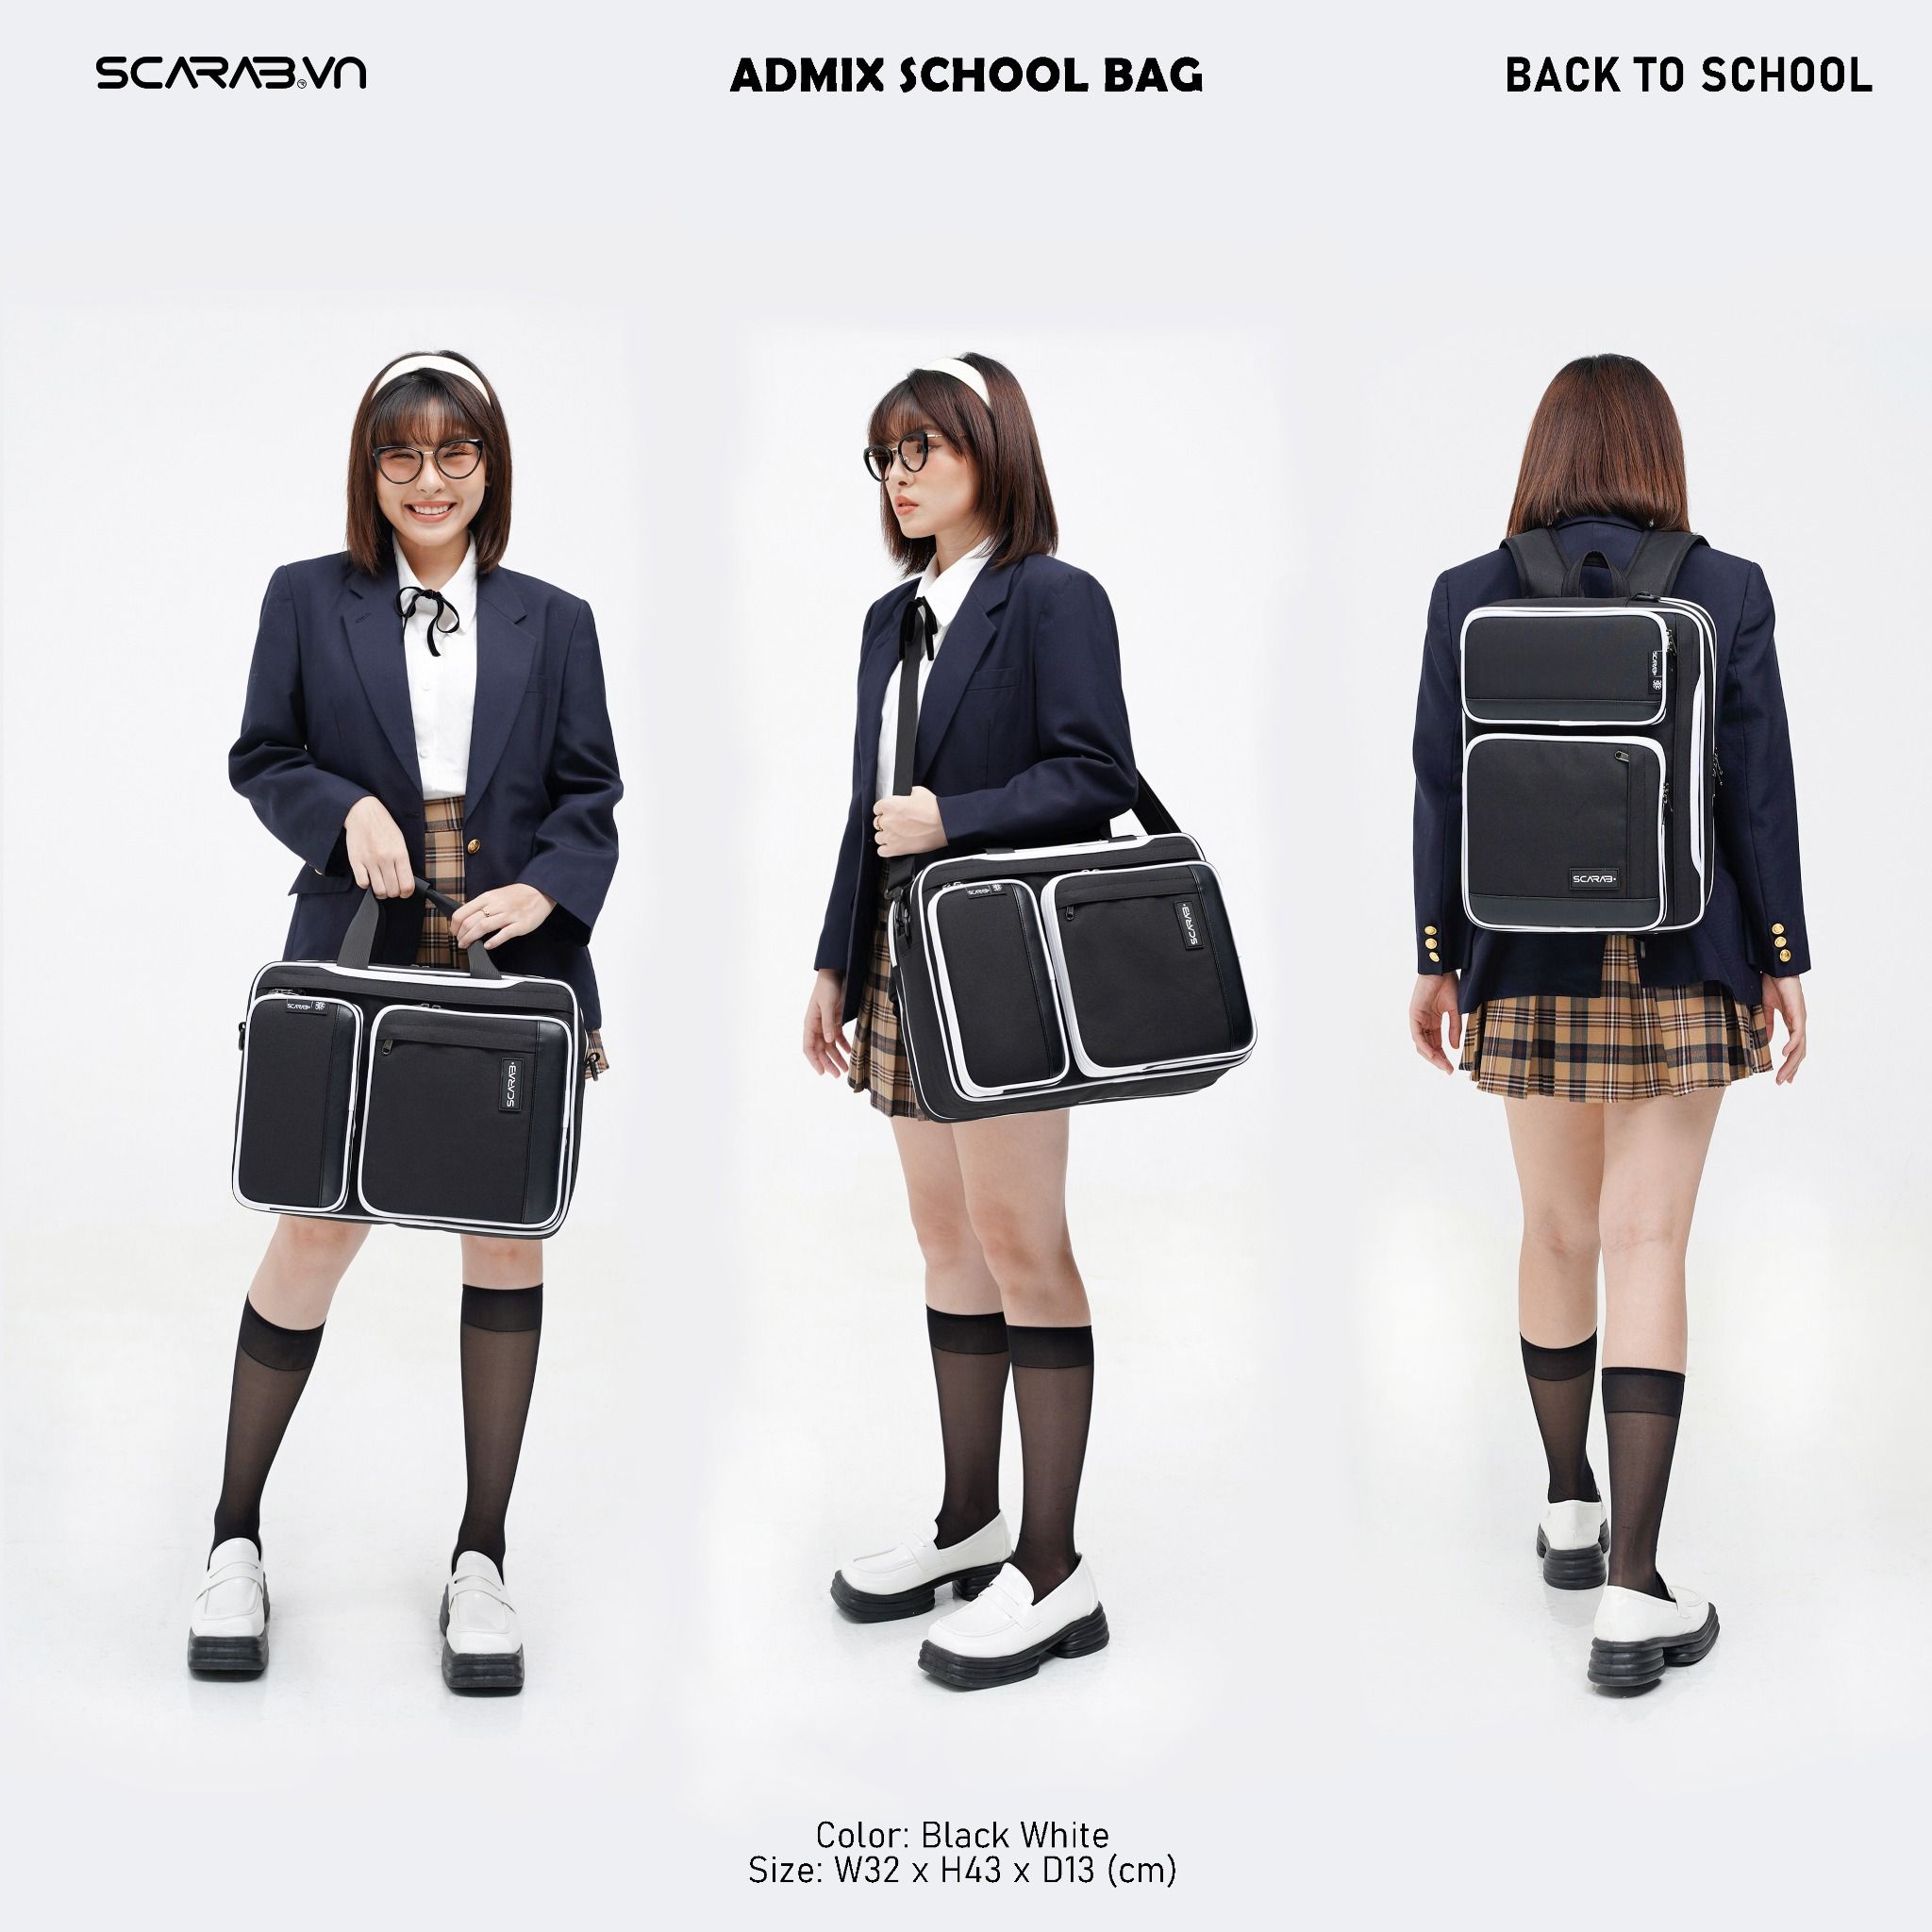  Admix School Bag -  Black White 